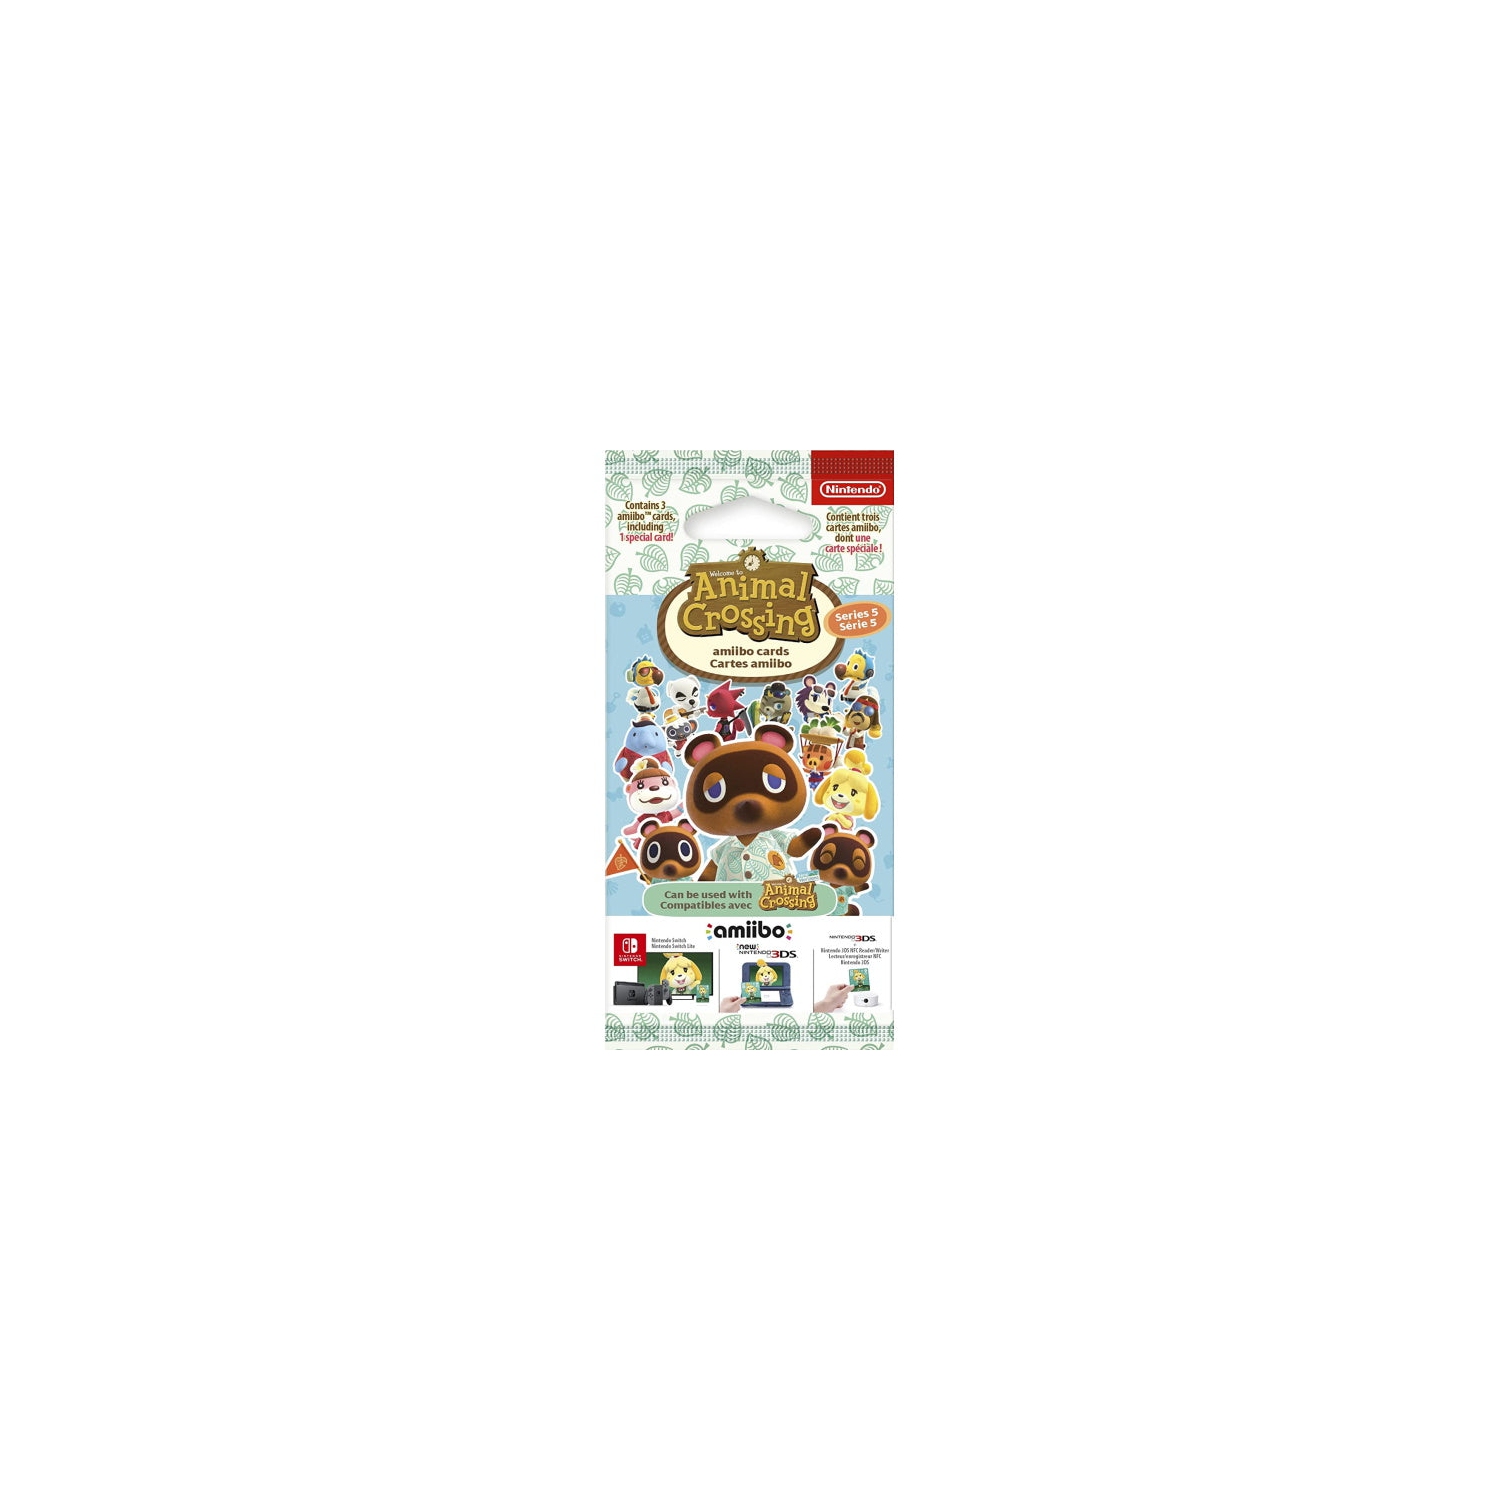 Nintendo Animal Crossing Amiibo Cards - Series 5 - 3 Card Pack [Nintendo Accessory]